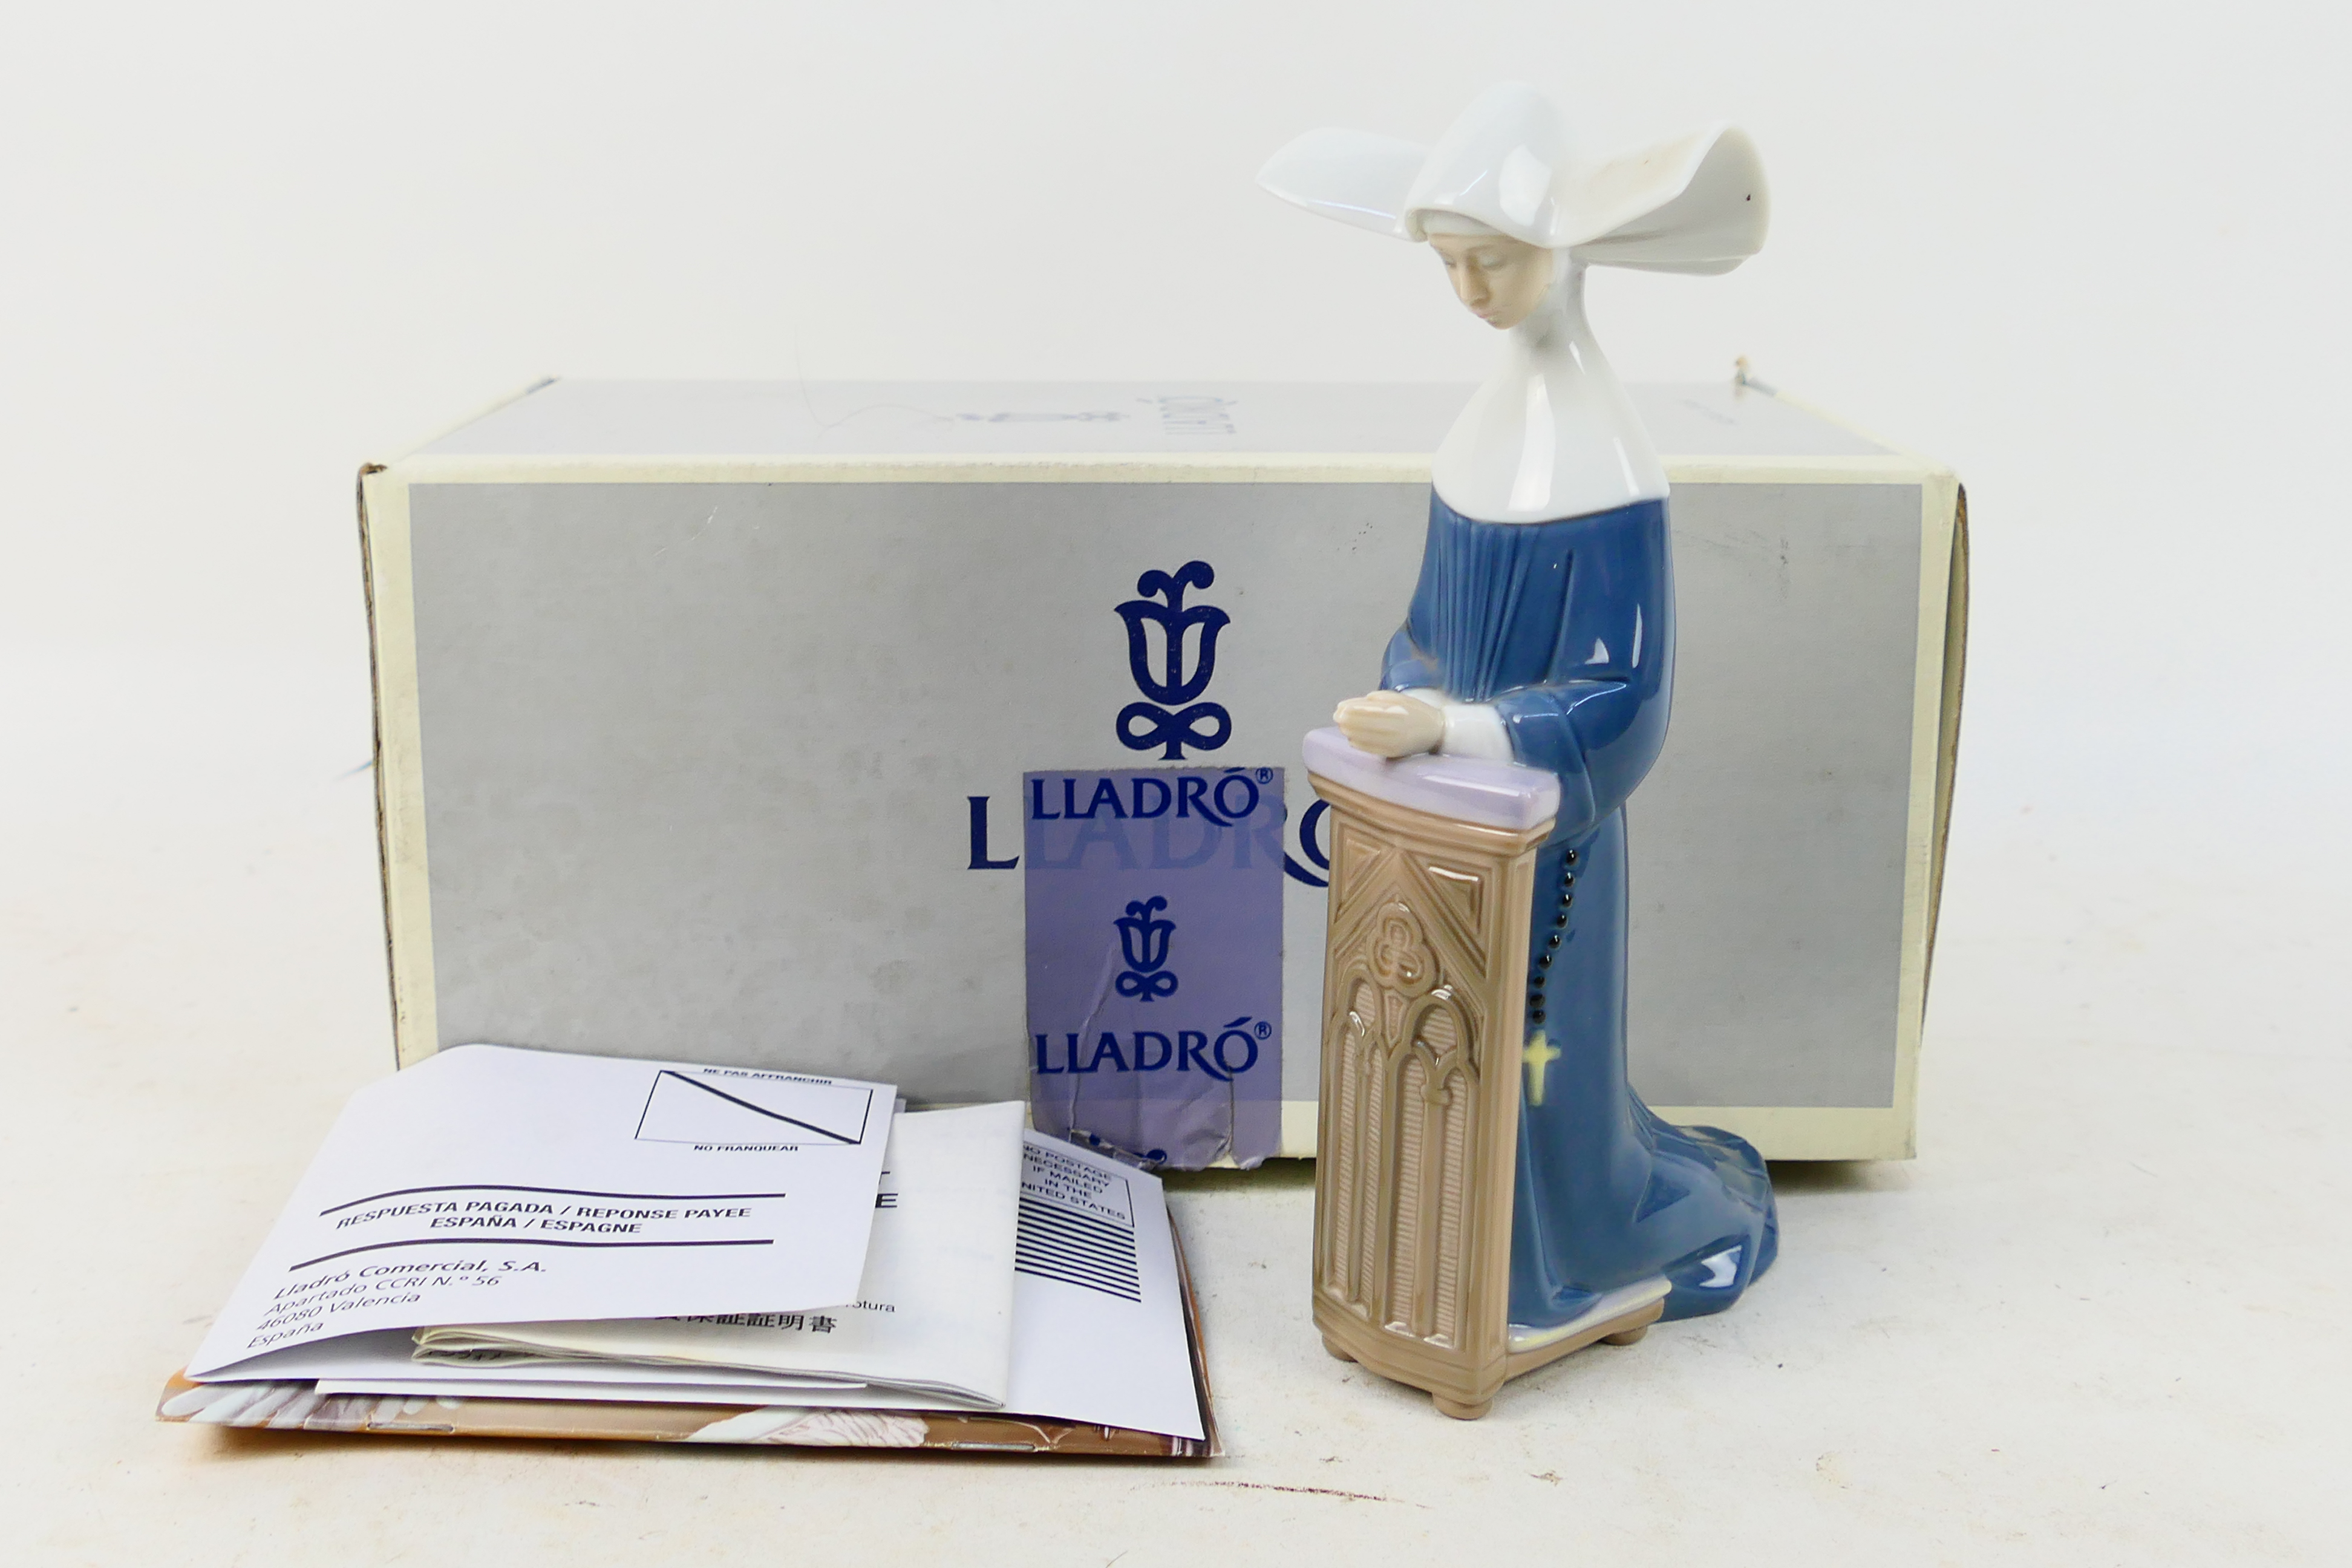 A boxed Lladro figure depiction a prayin